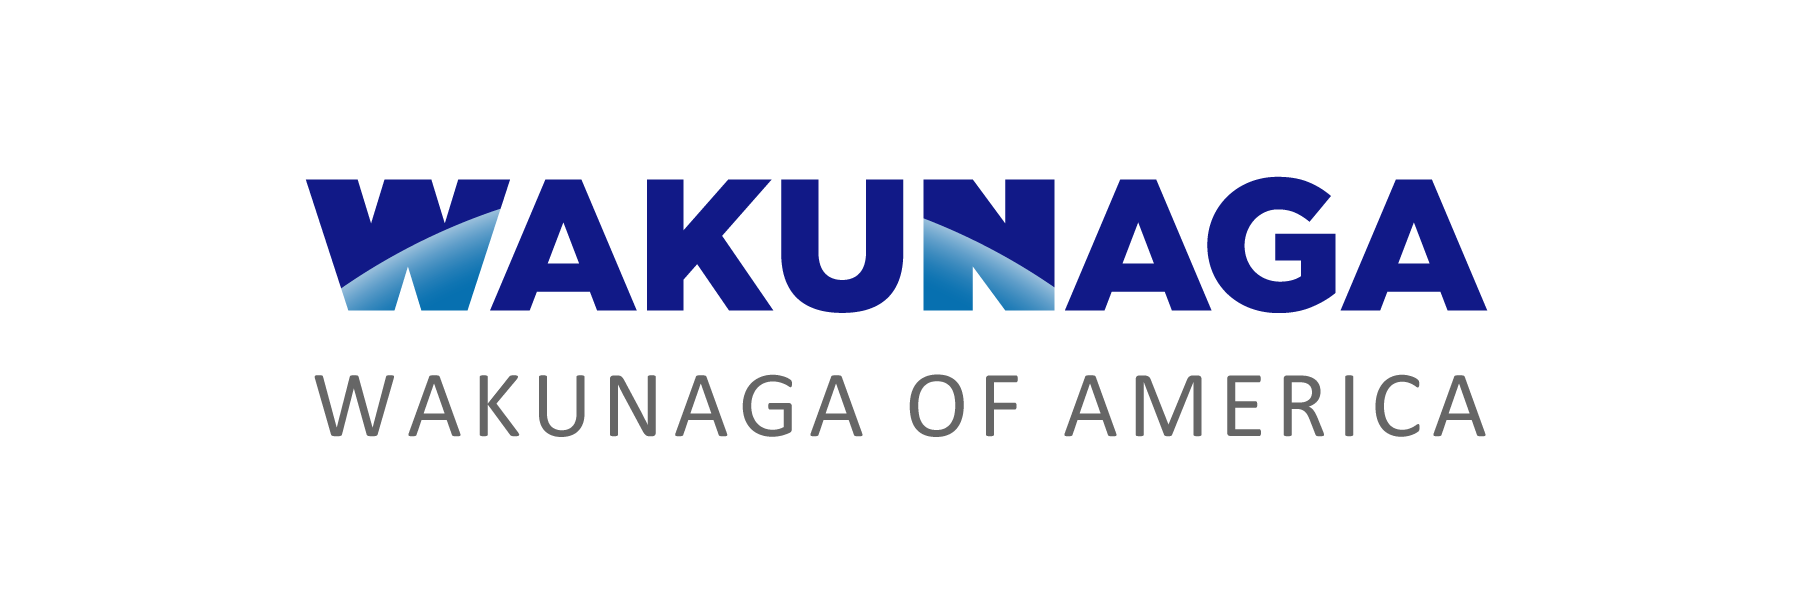 Wakunaga logo